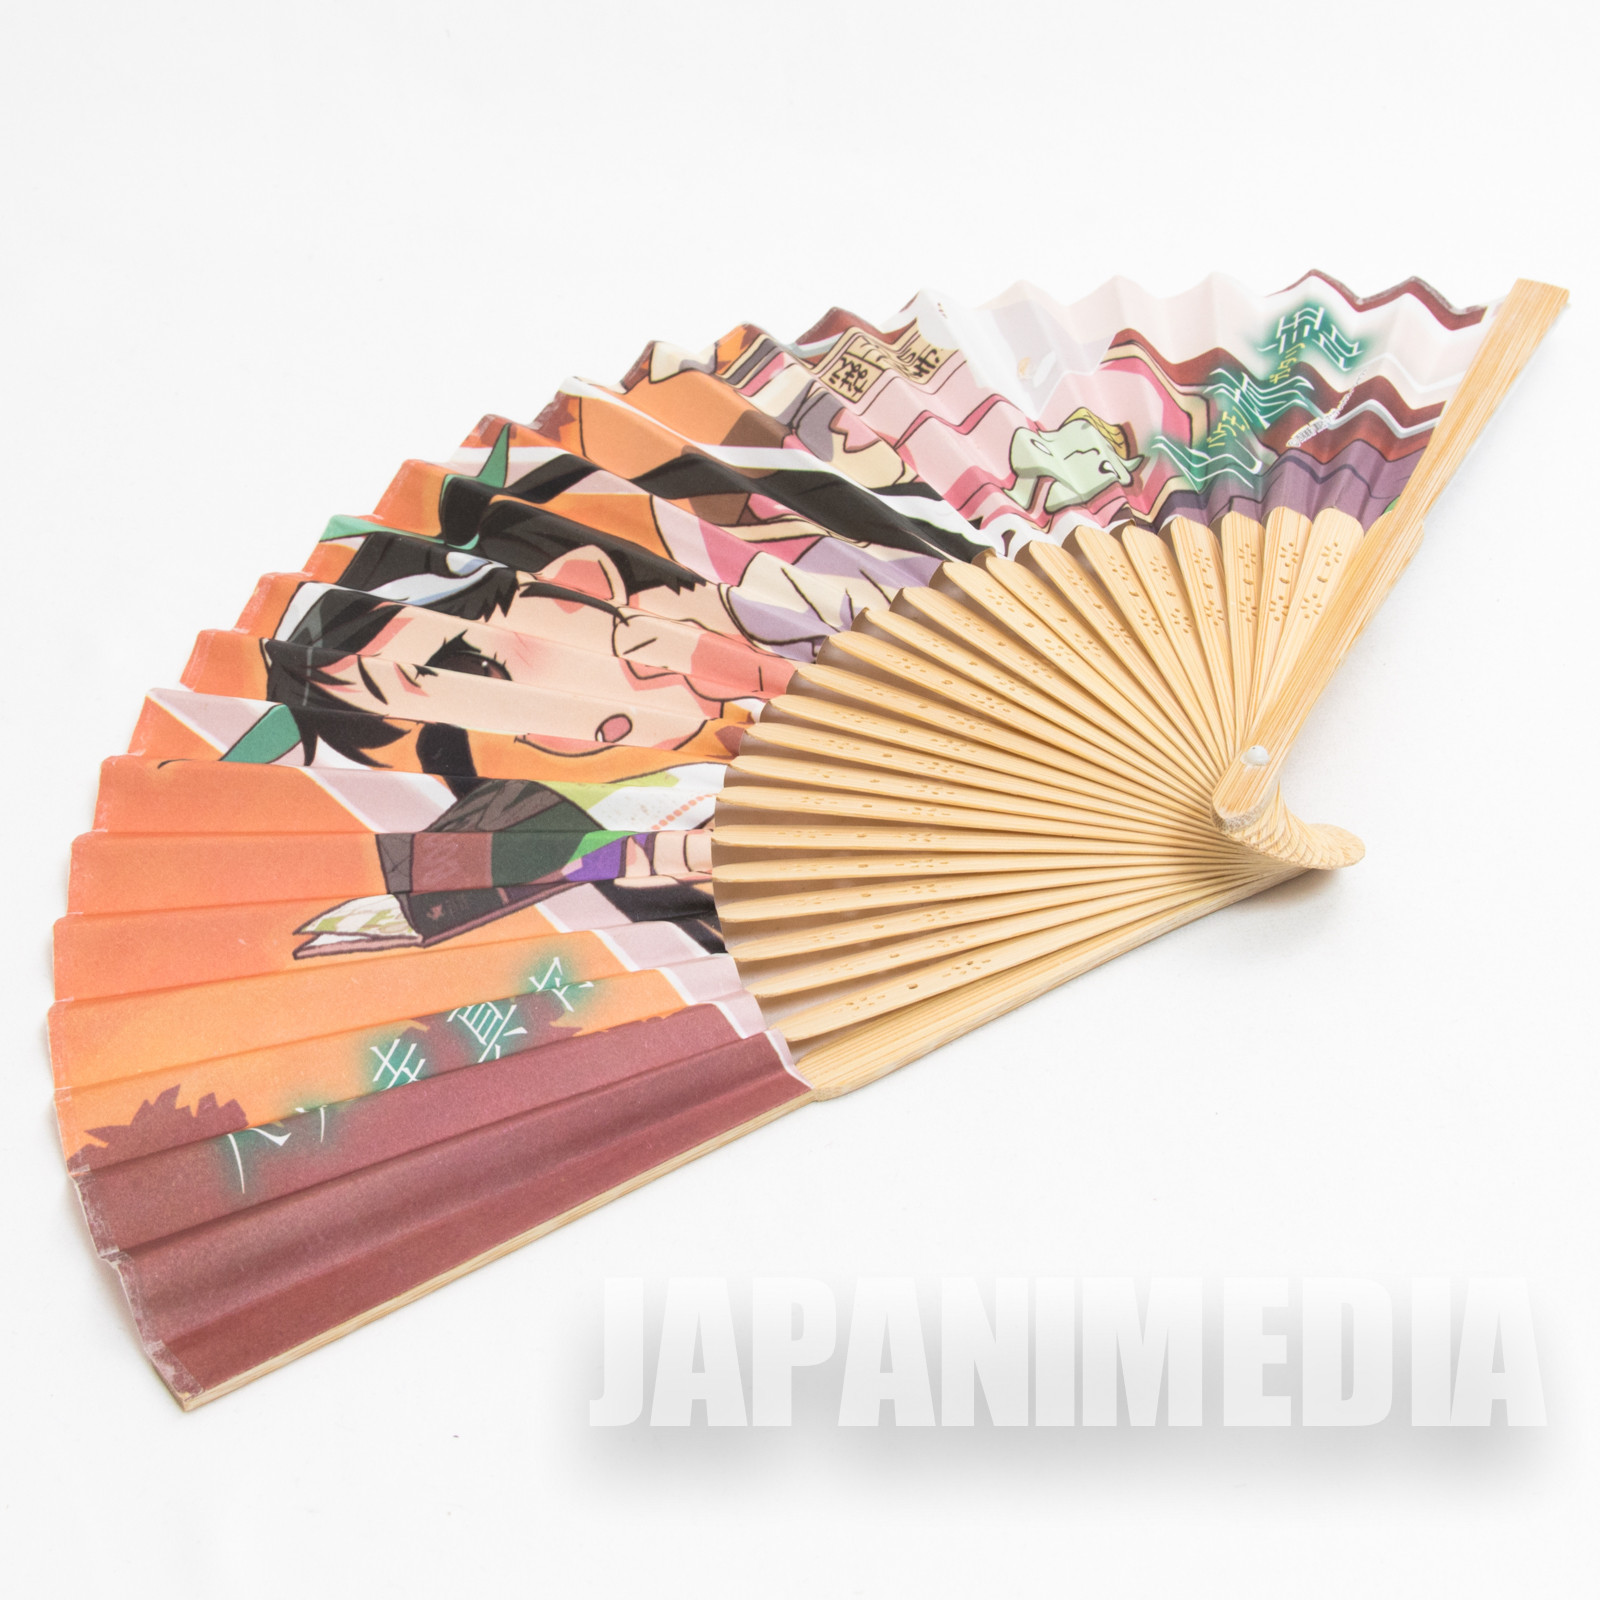 Bakemonogatari Mayoi Hachikuji Folding Fan Japanese Sensu JAPAN ANIME MANGA